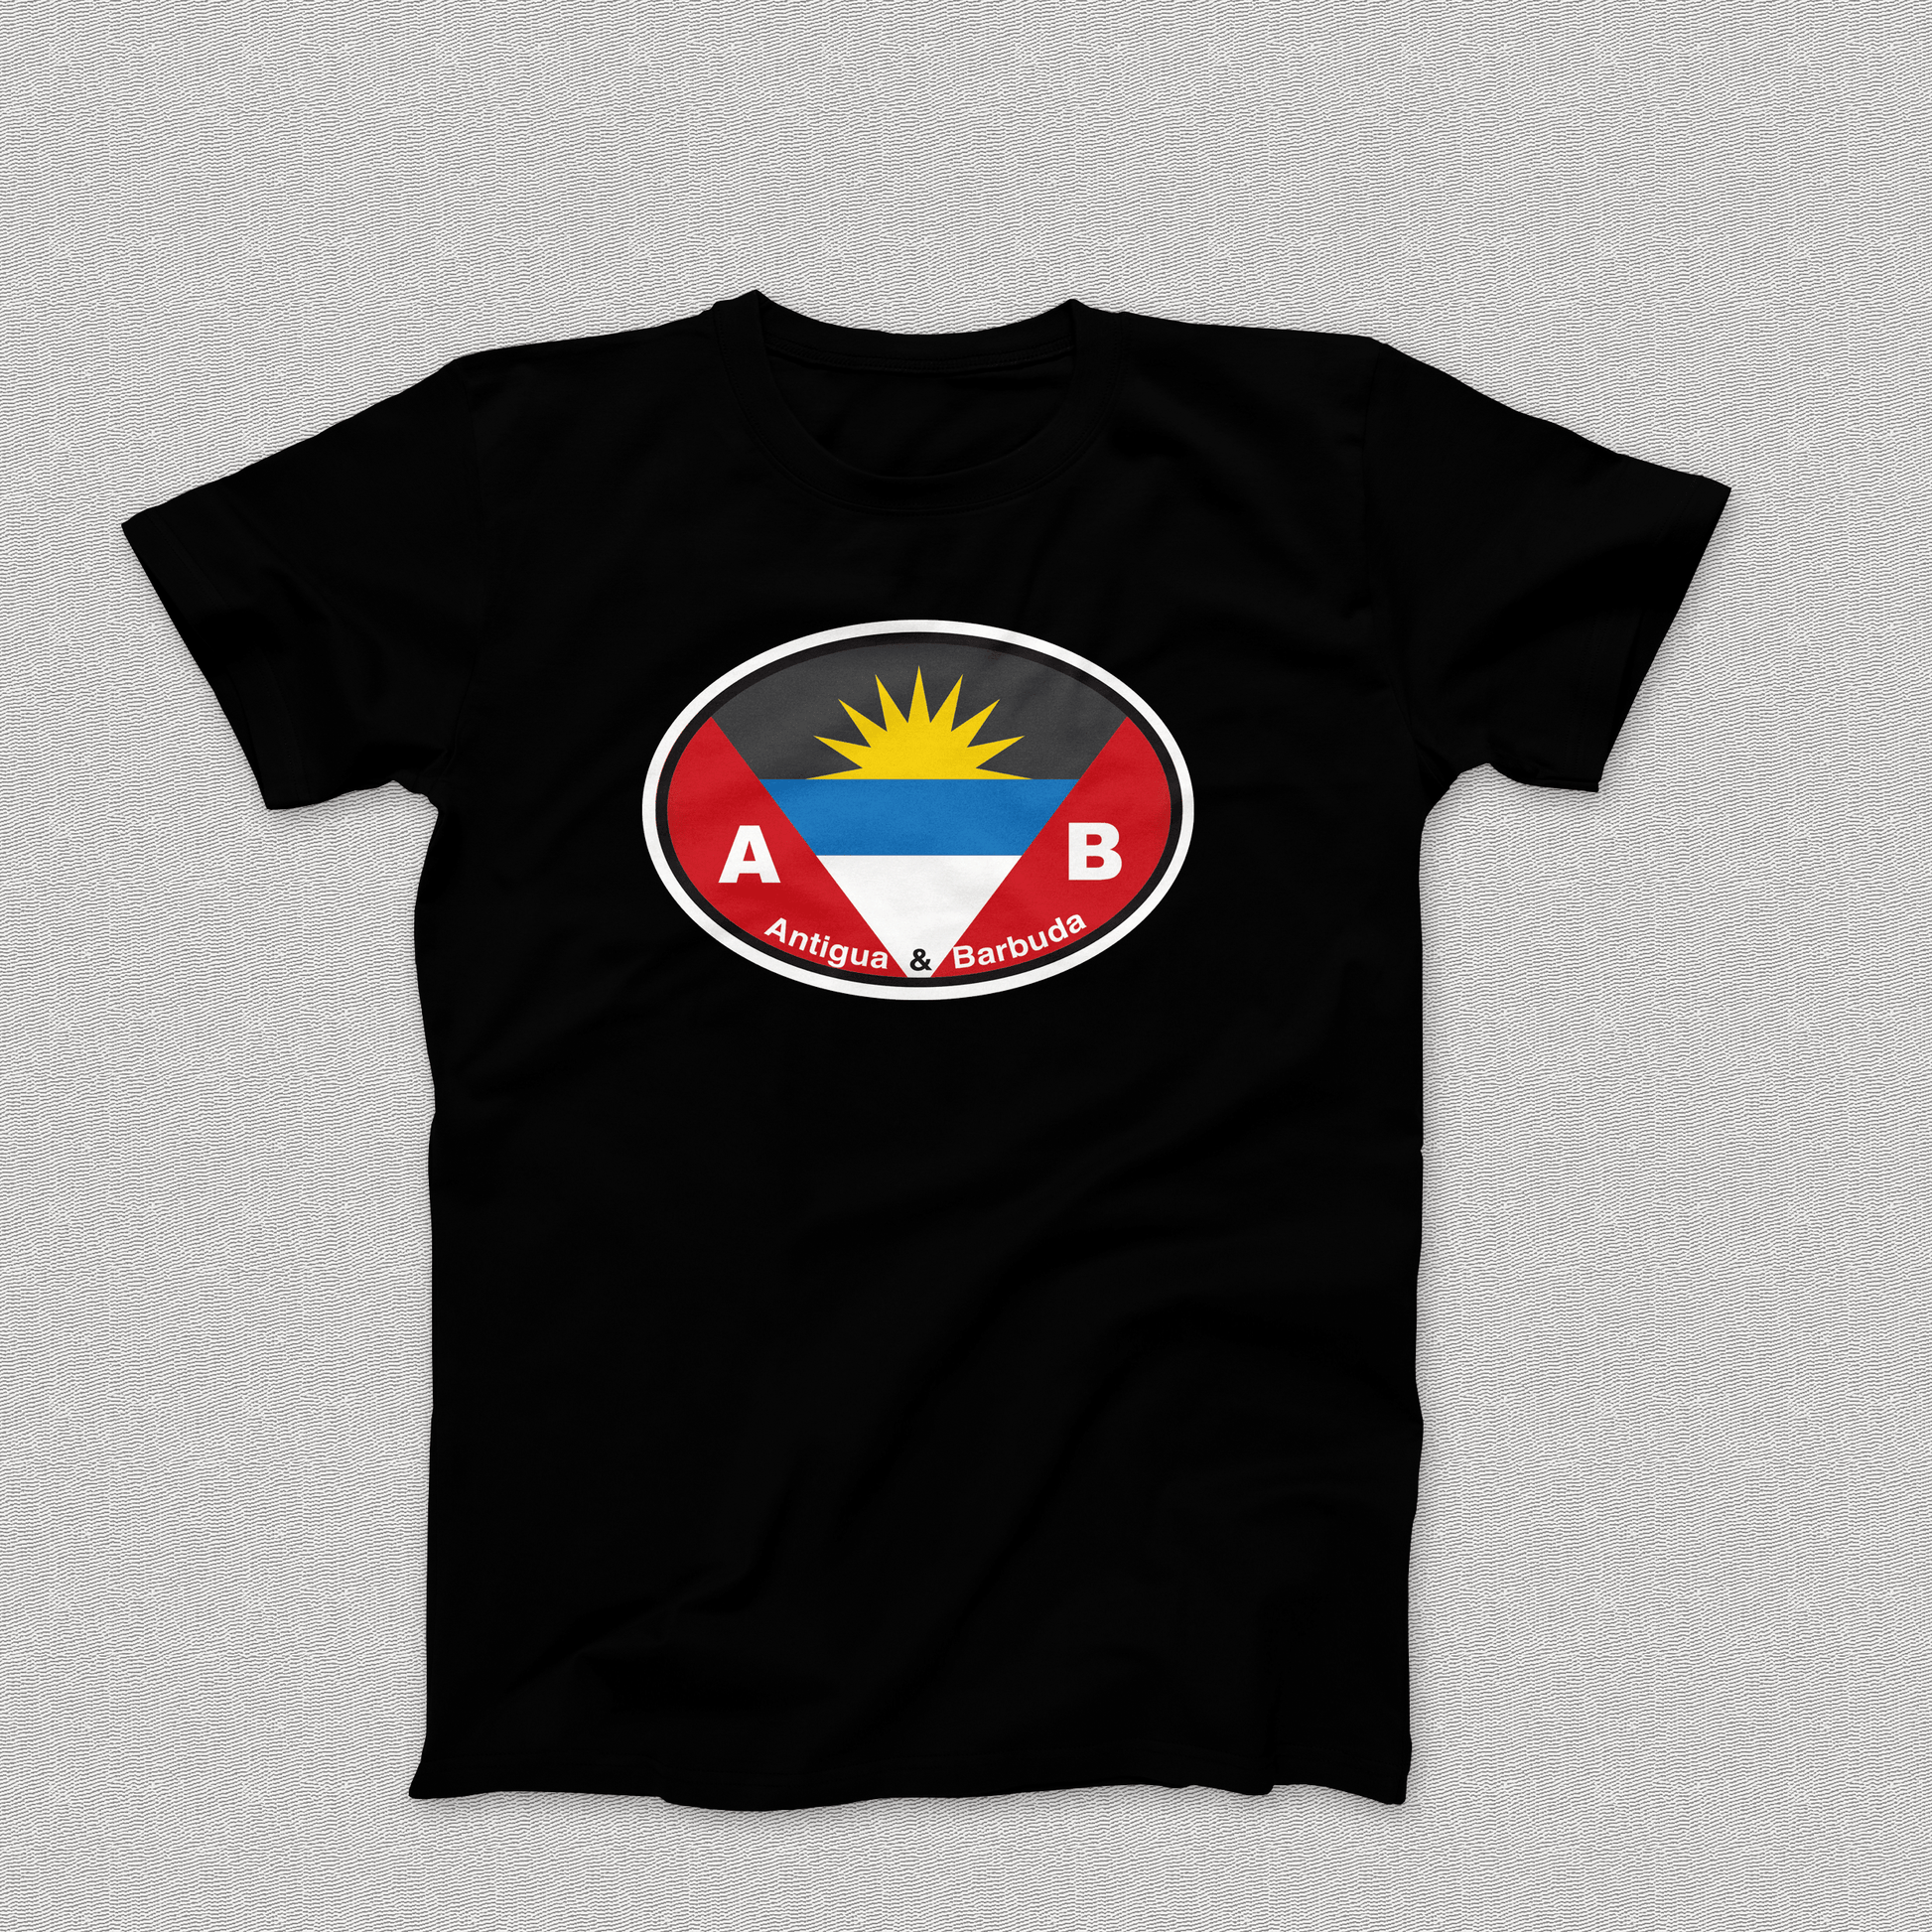 Antigua & Barbuda Souvenir T-Shirts - My Destination Location